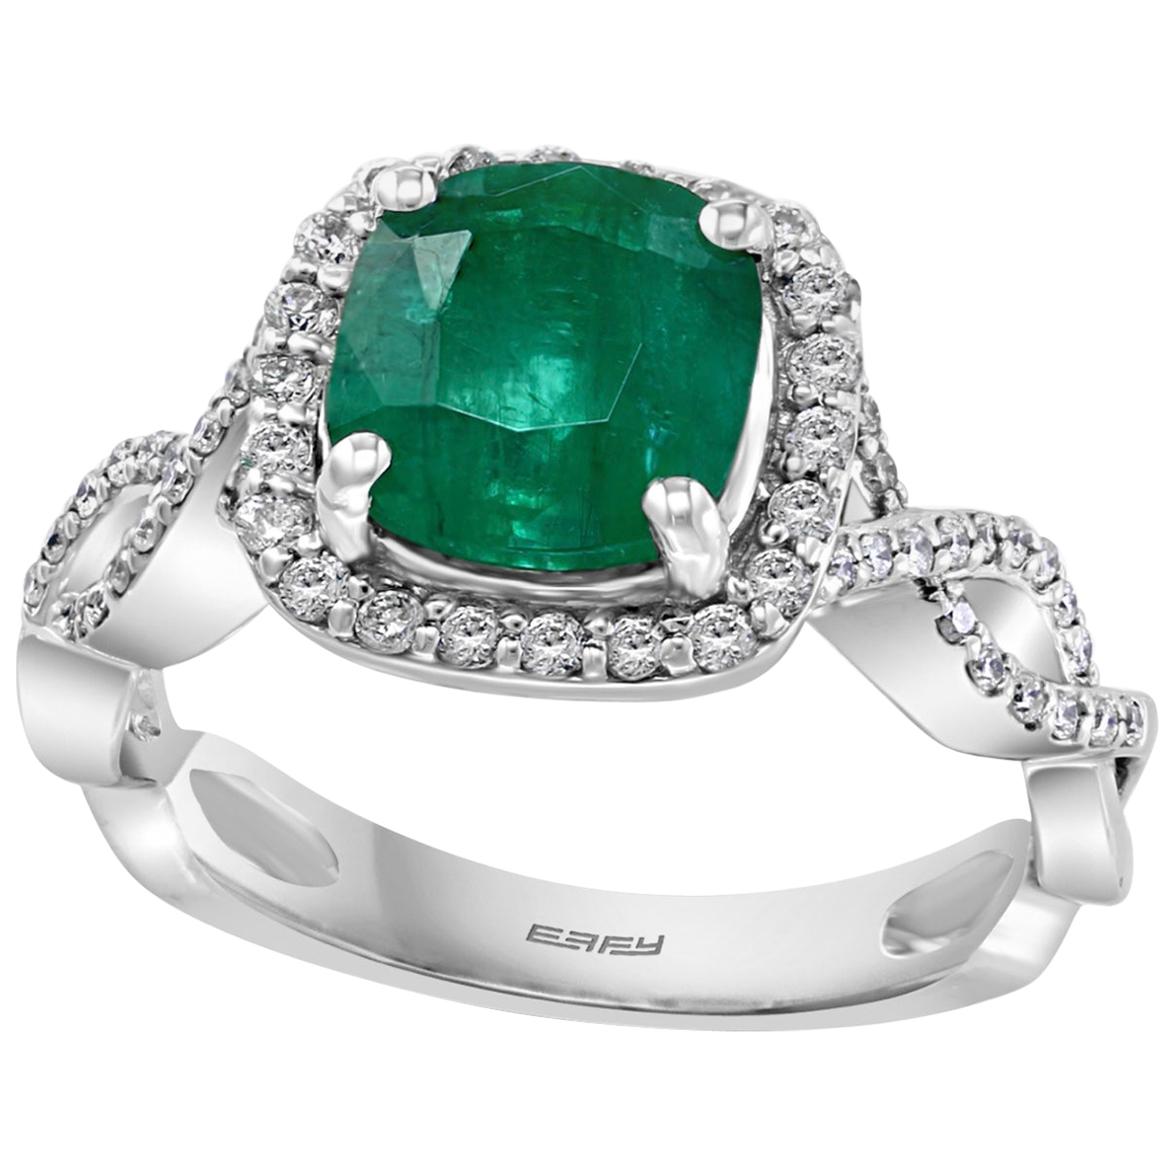 Designer Effy's 1.8 Carat Emerald and Diamond Cocktail Ring 14 Karat White Gold For Sale